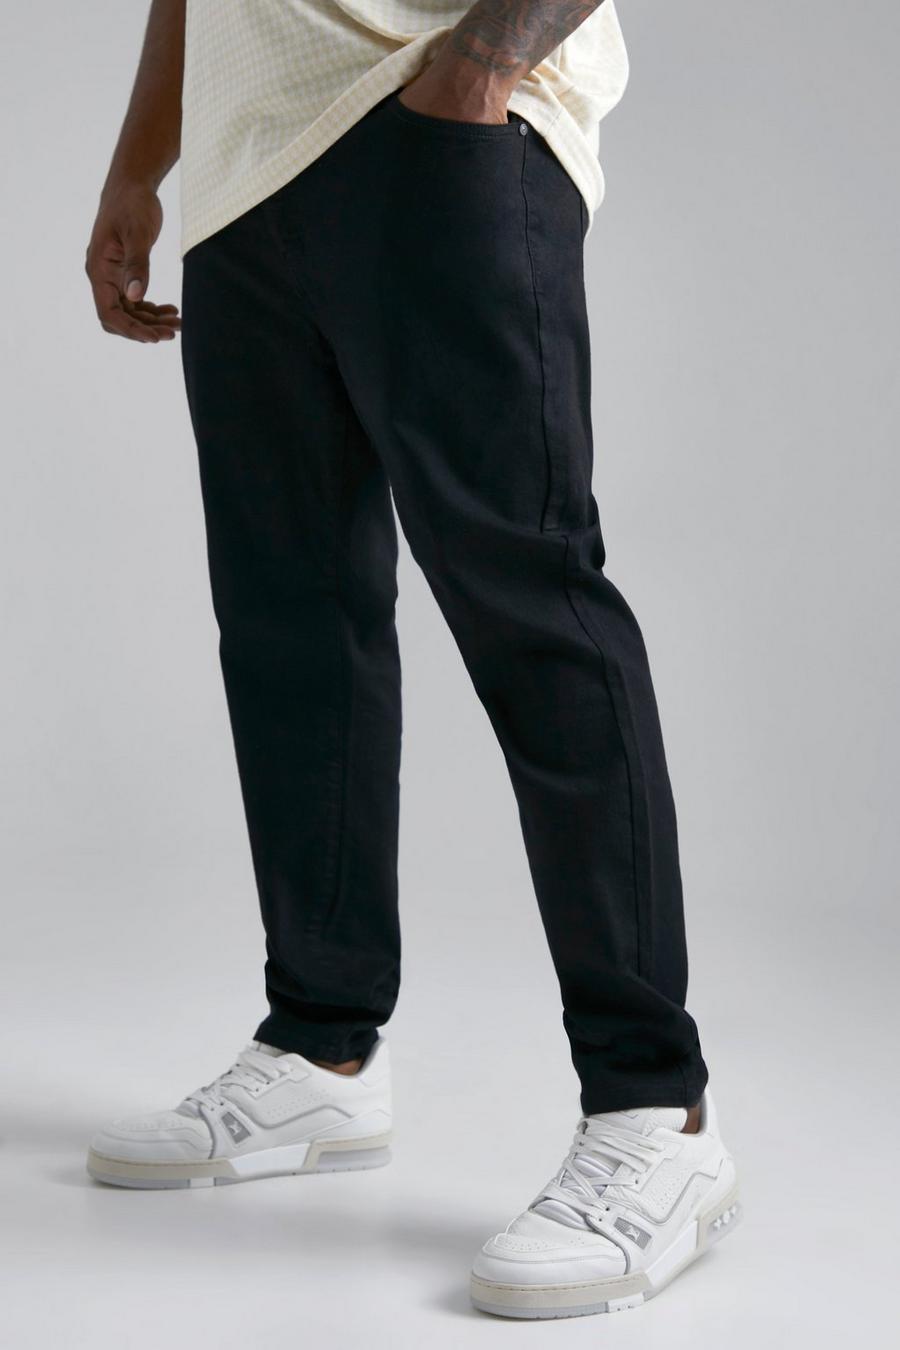 Jwl-oversized Black Jeans Mens Plus Size Denim Pants Husband